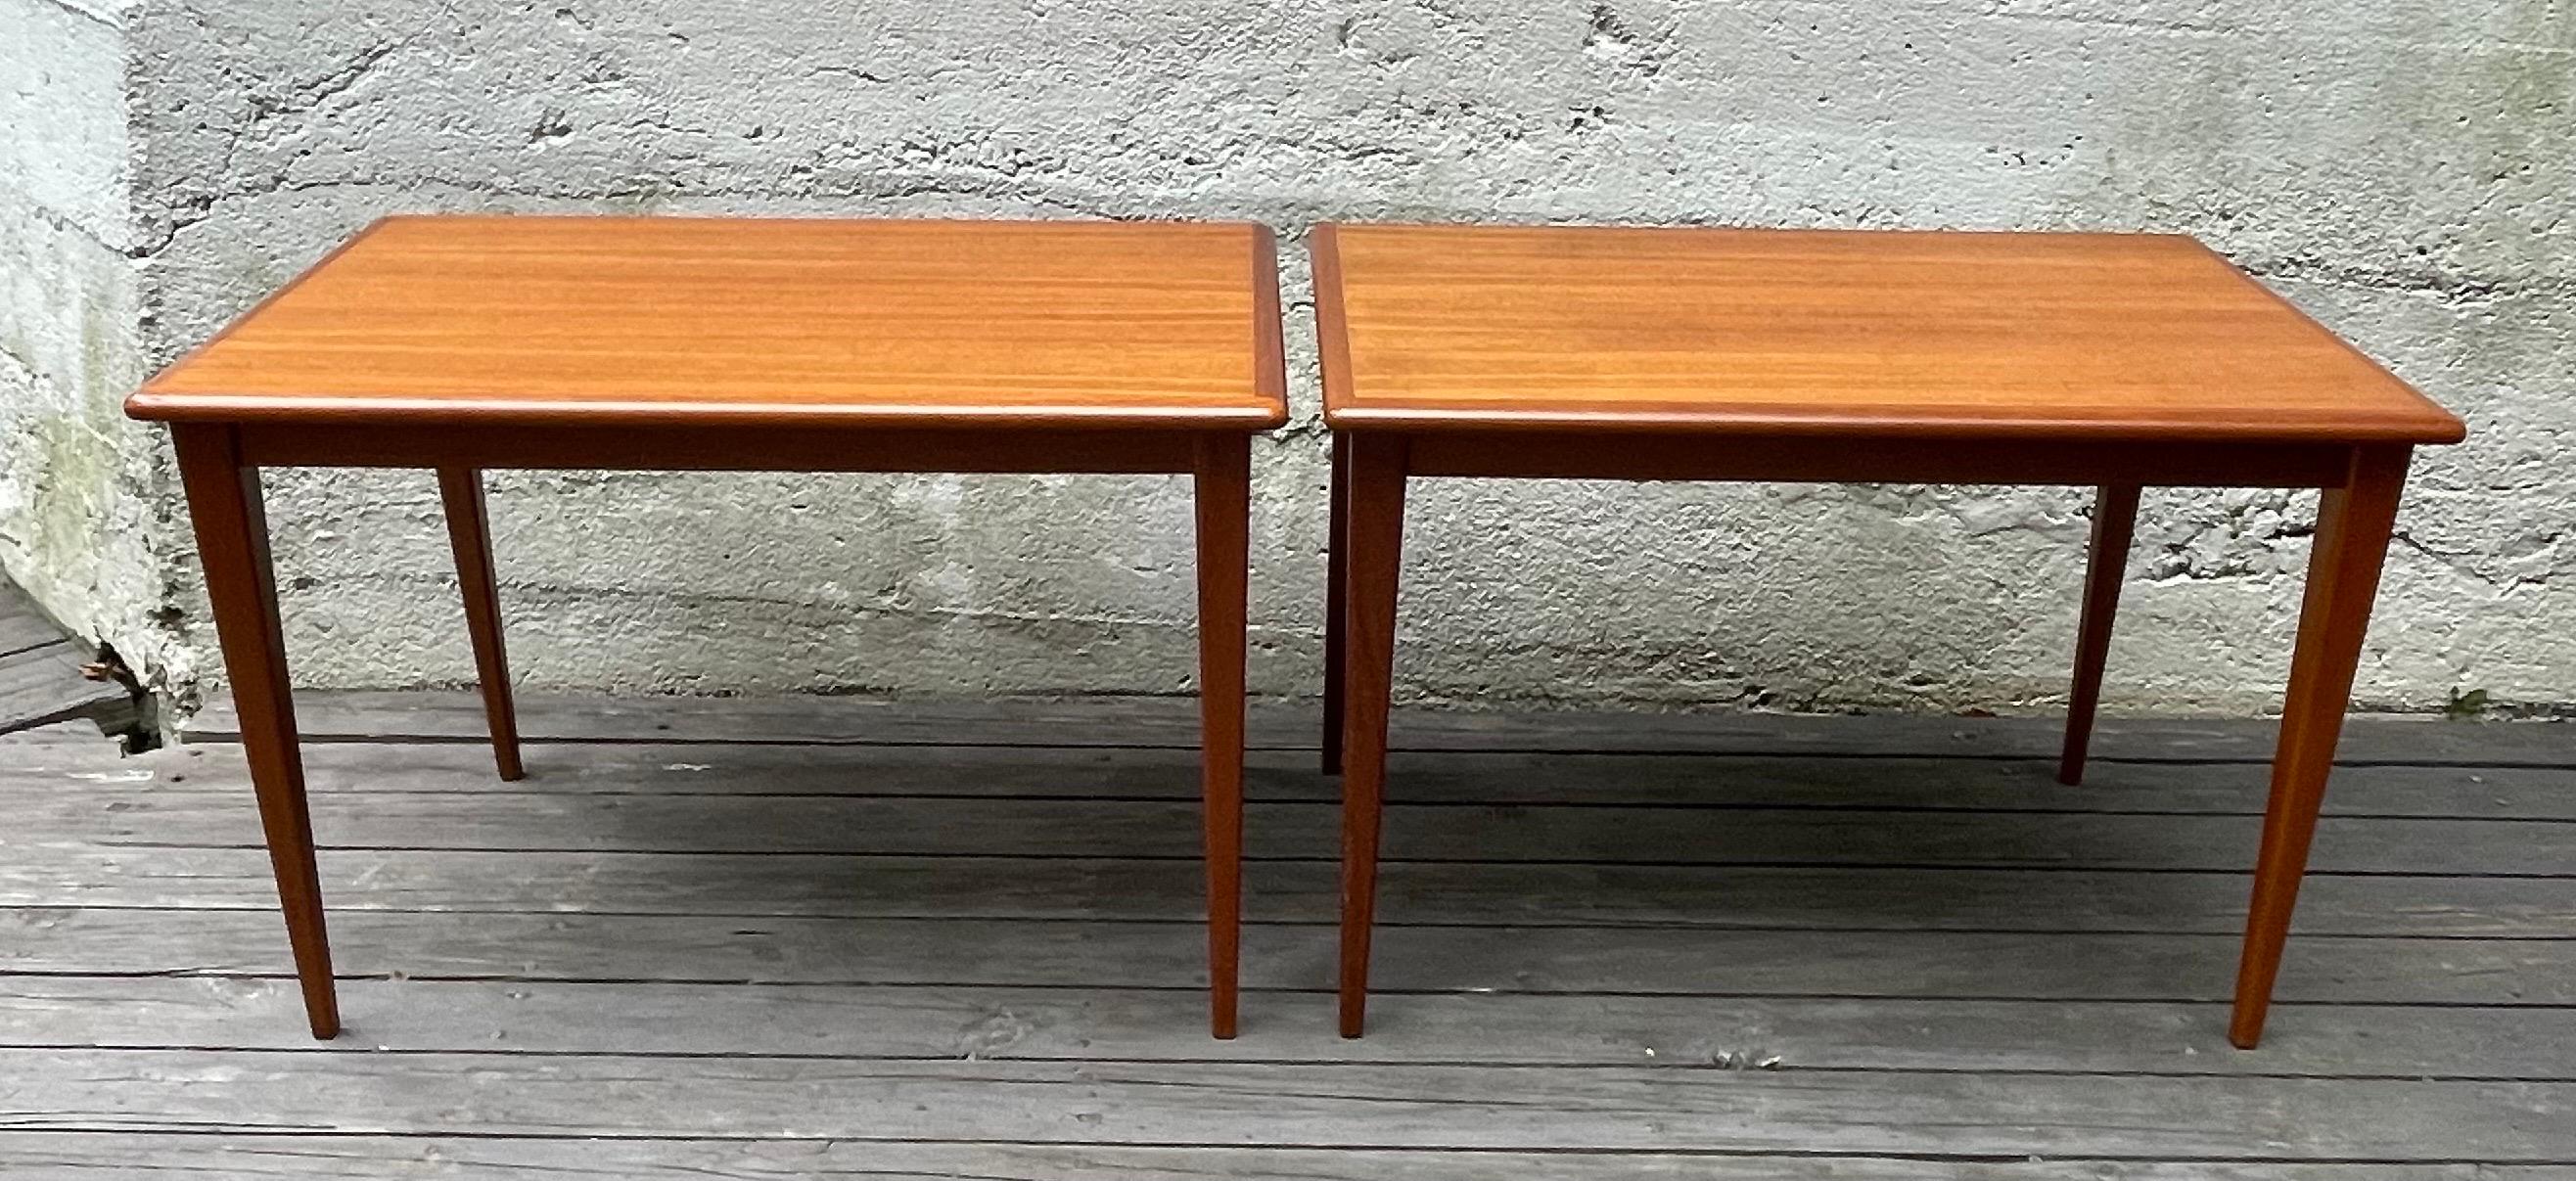 Danish Pair of Mid-Century Modern Teak Side Tables or End Tables, Denmark, 1960's For Sale